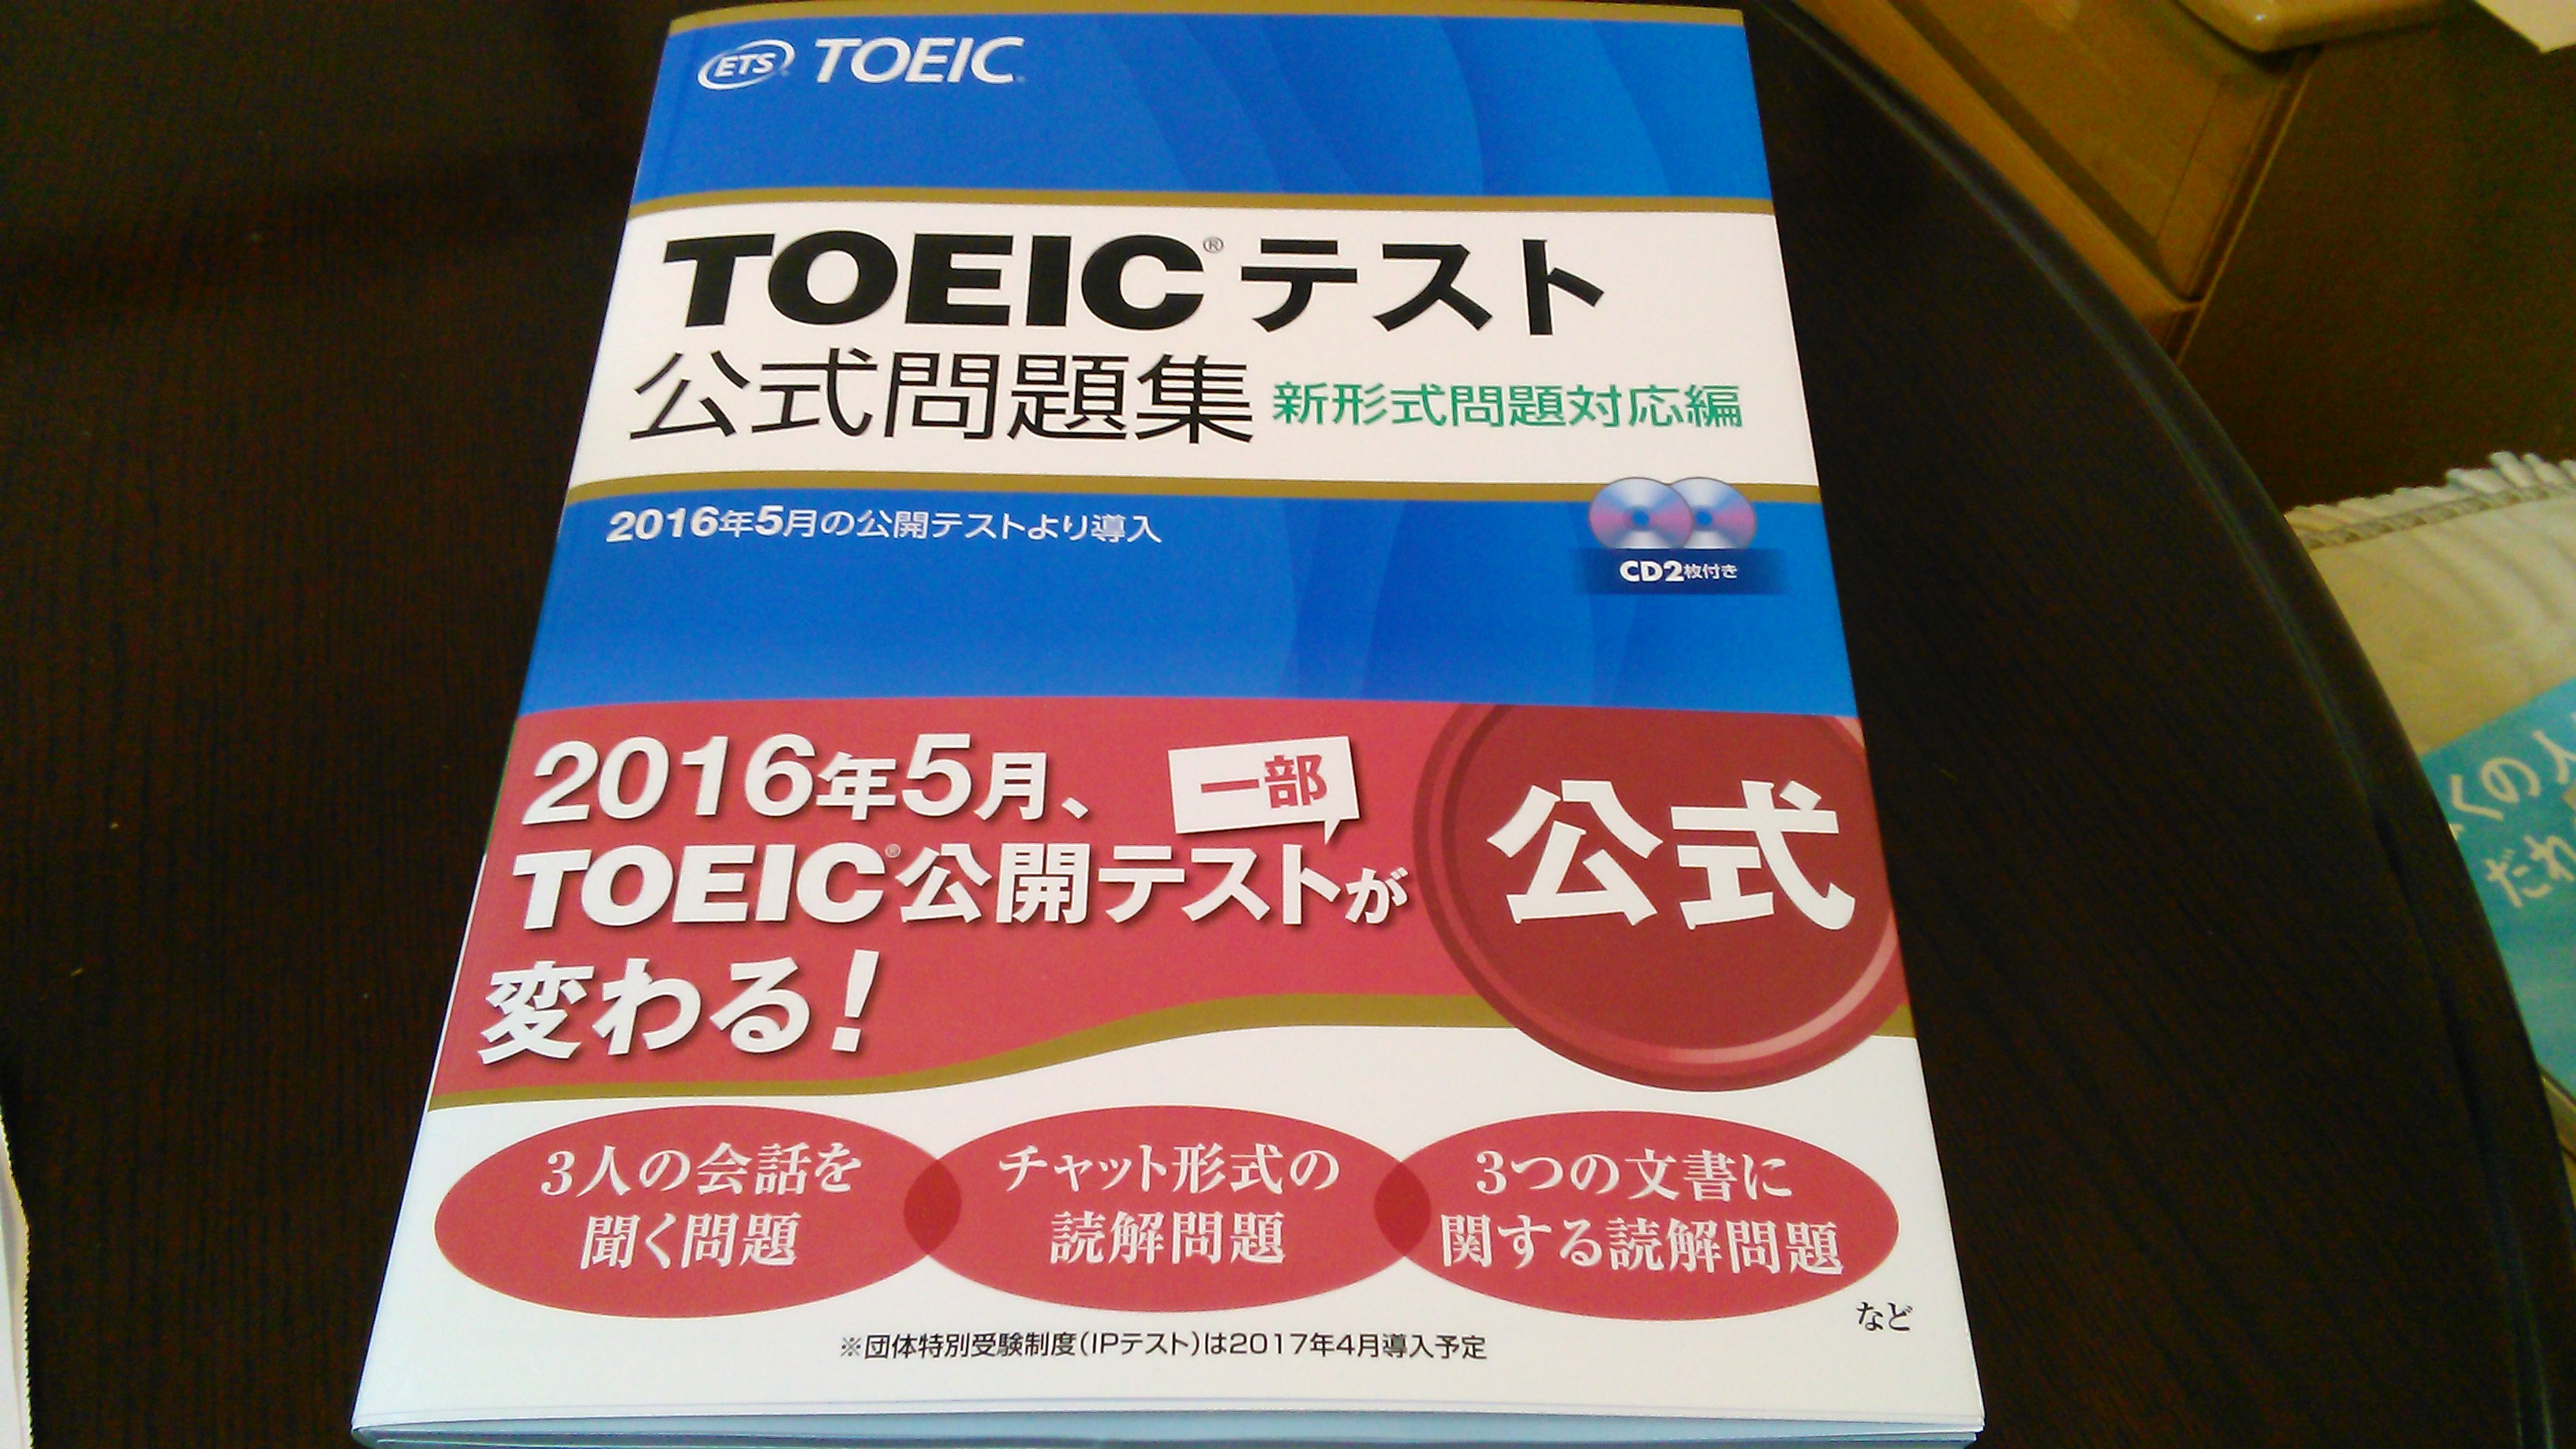 TOEIC L&Rテスト文法問題でる1000問、公式TOEIC 問題集 7 - 語学・辞書